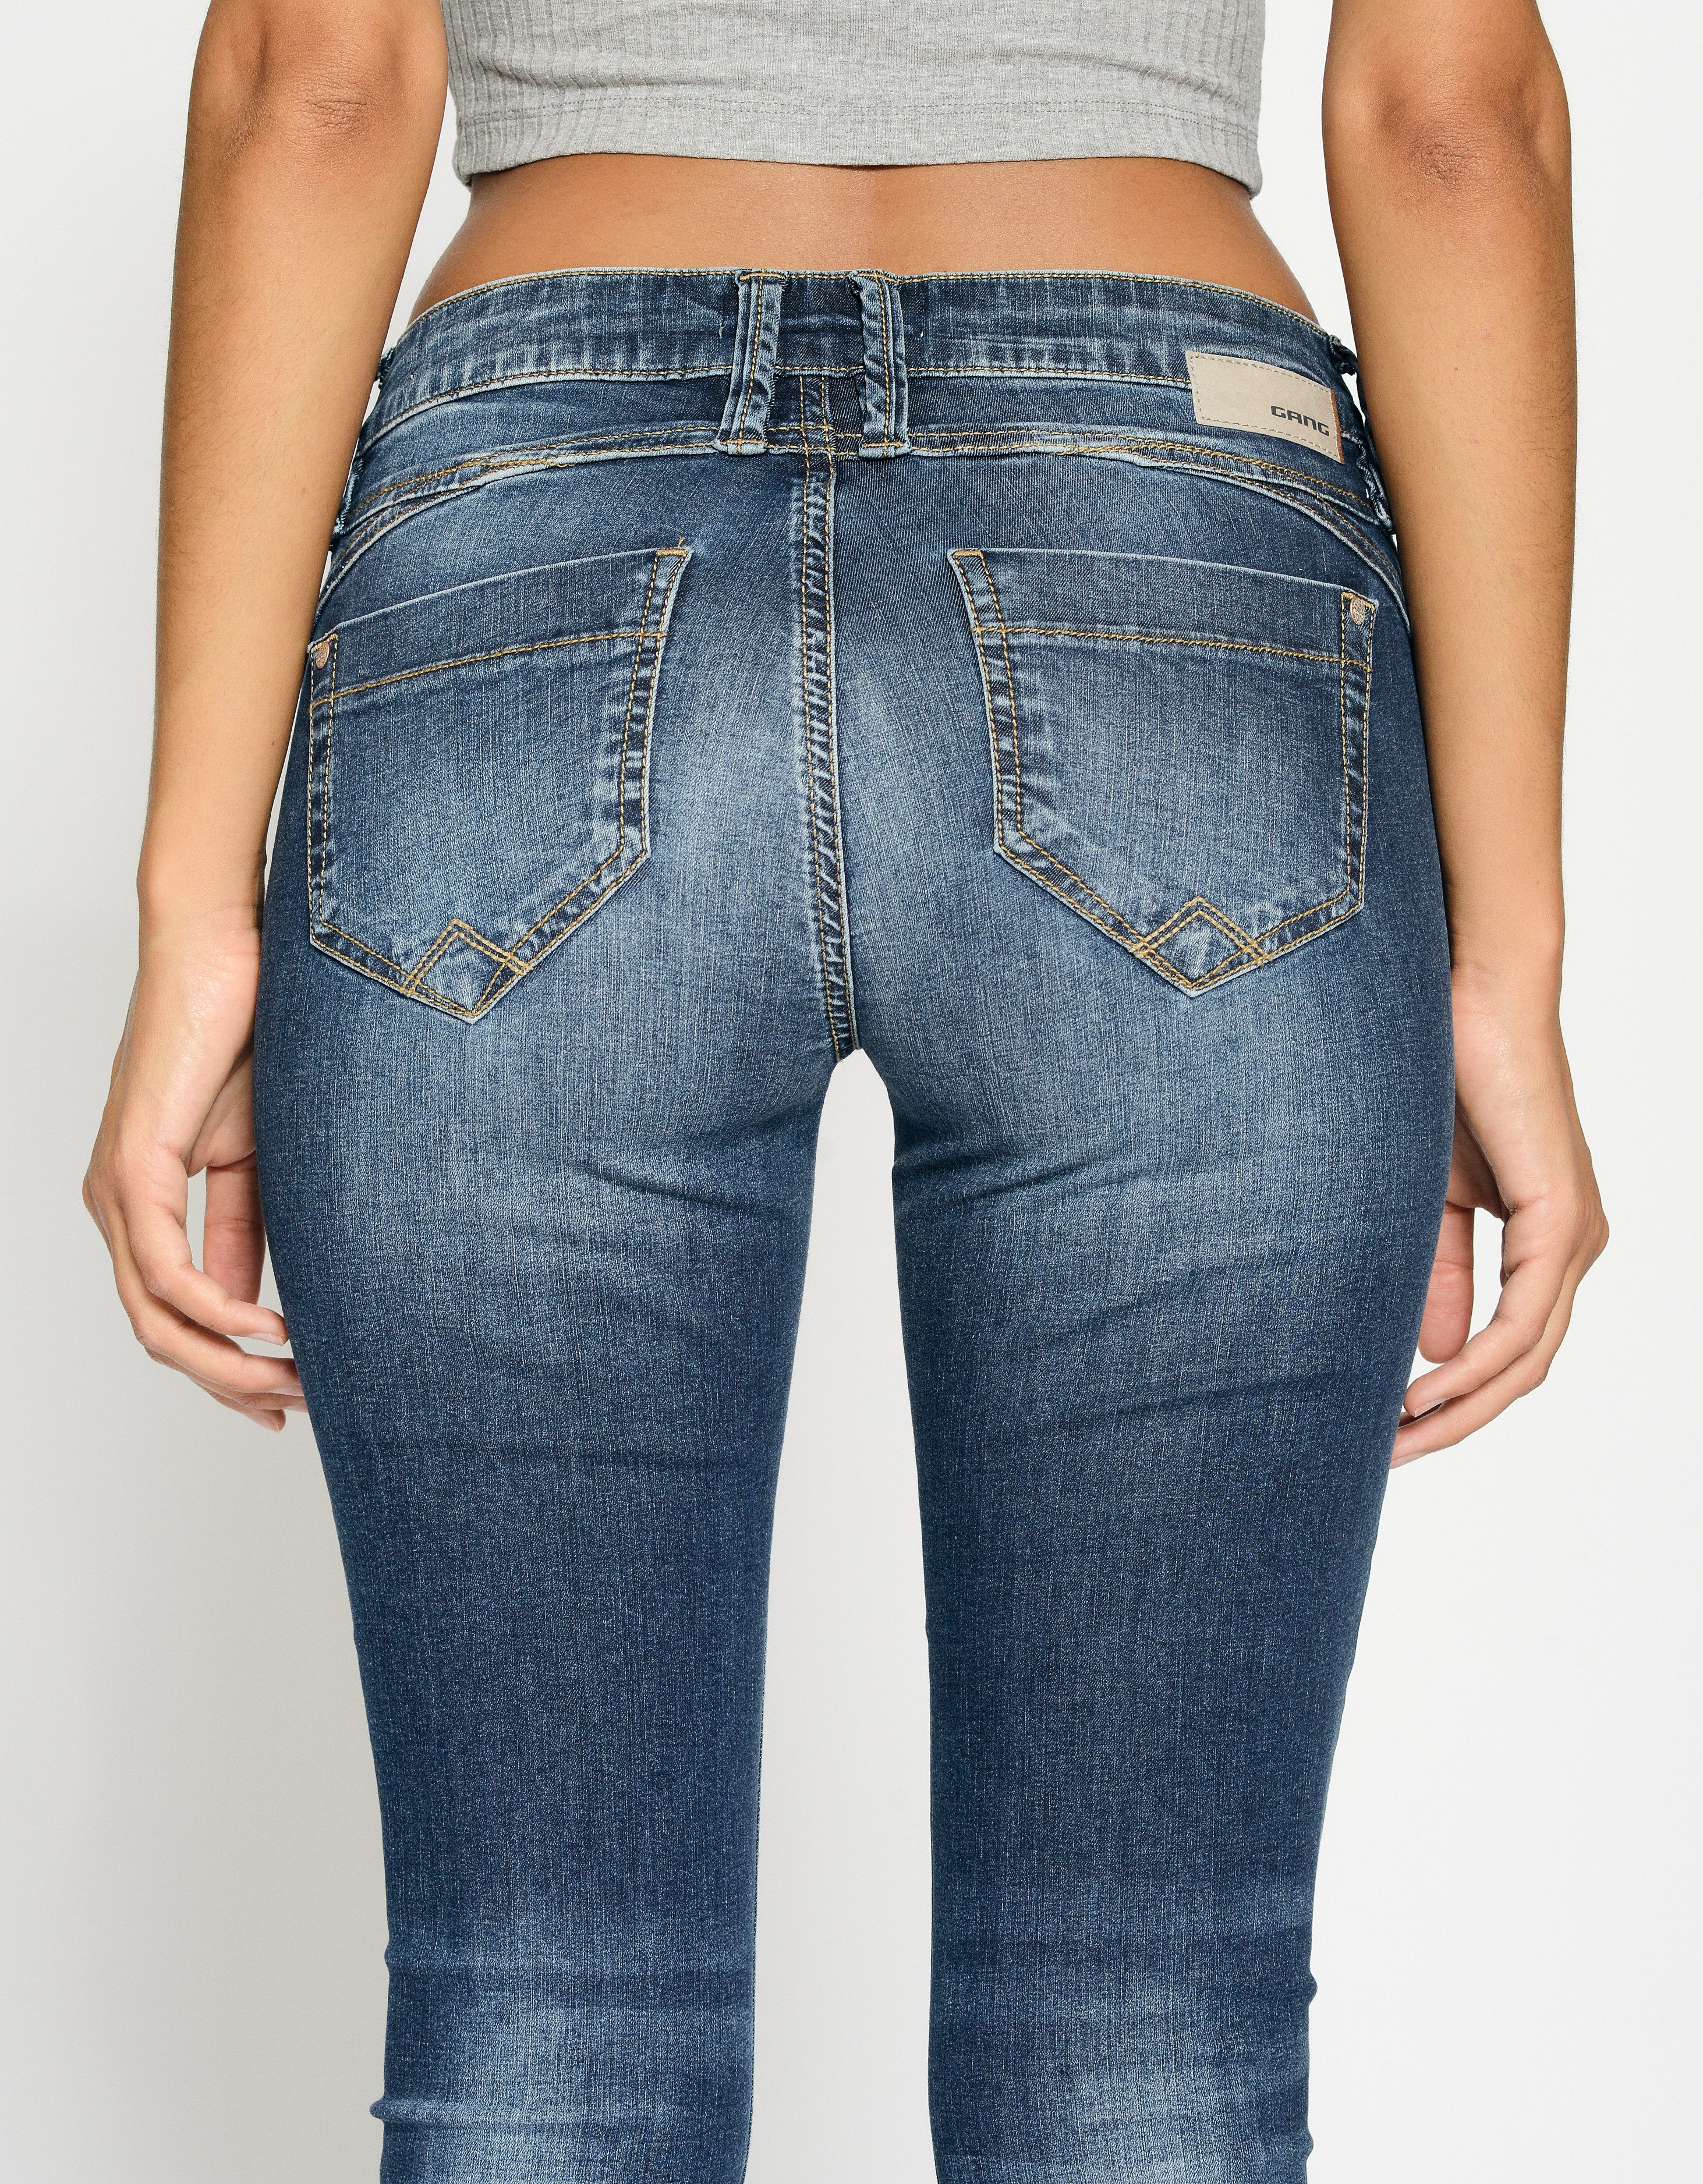 GANG Skinny fit jeans 94NIKITA met een rit-detail aan de kleingeldzakje